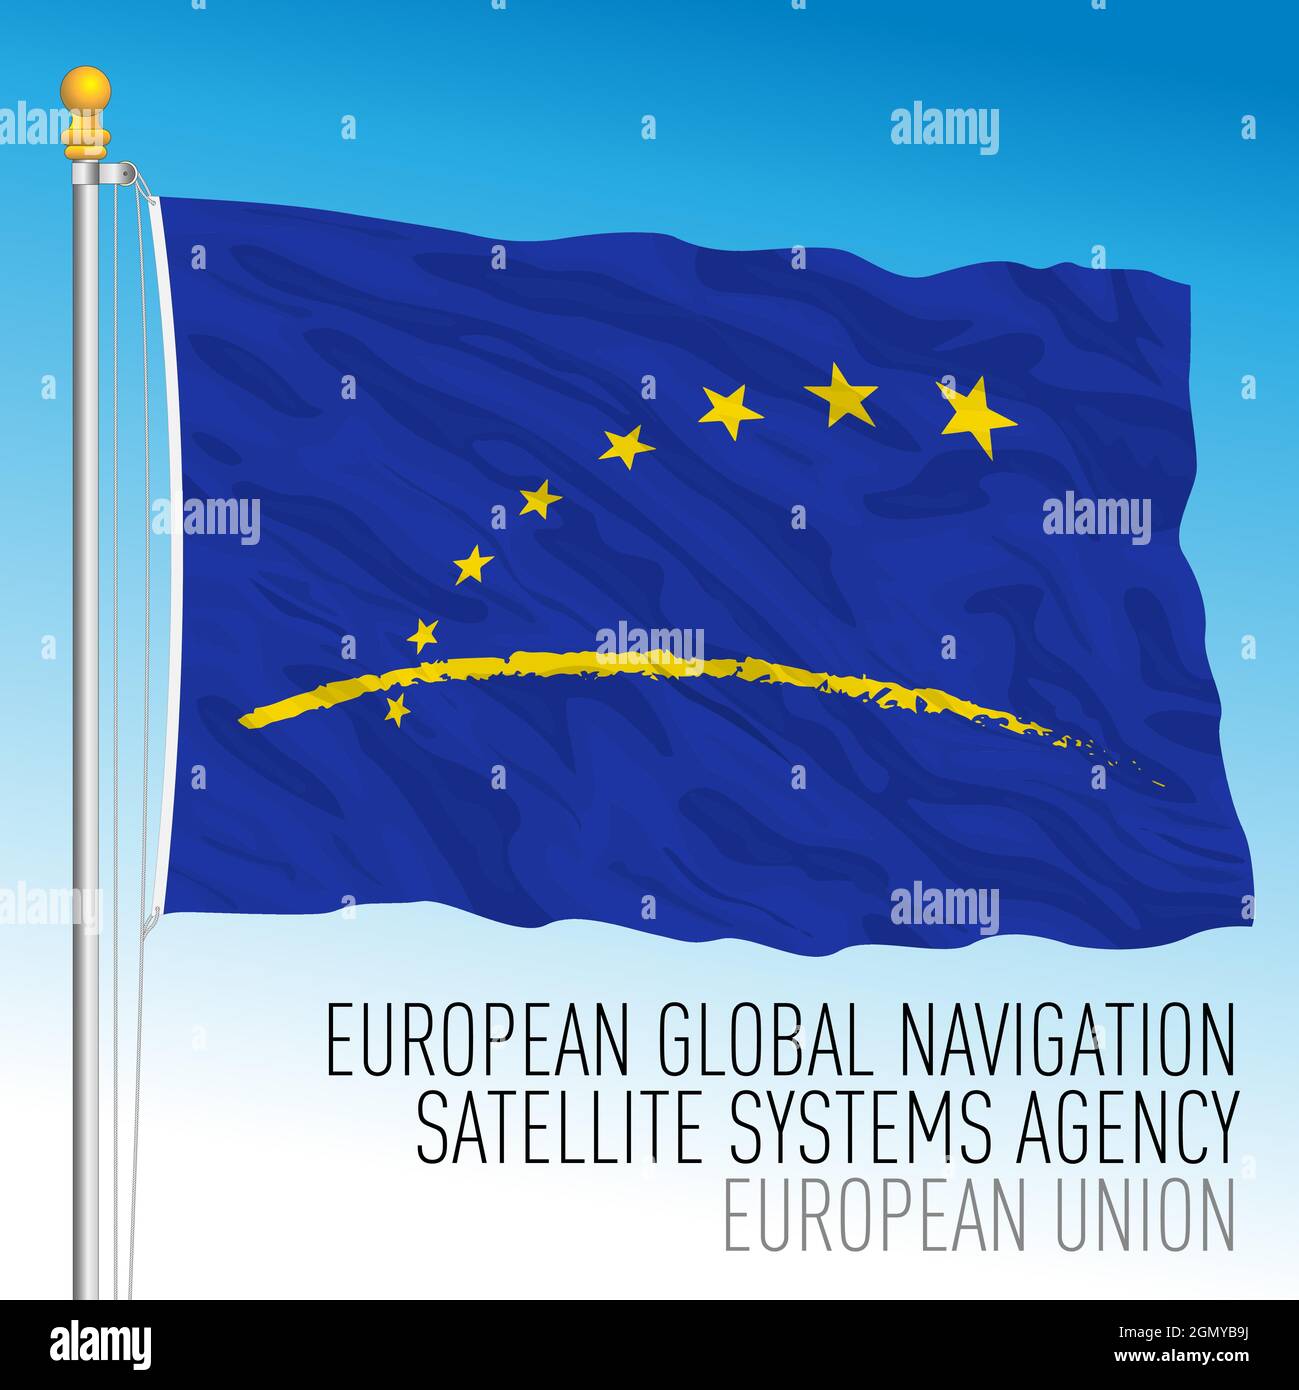 European Global Navigation Satellite Sytems Agency flag, European Union, vector illustration Stock Vector